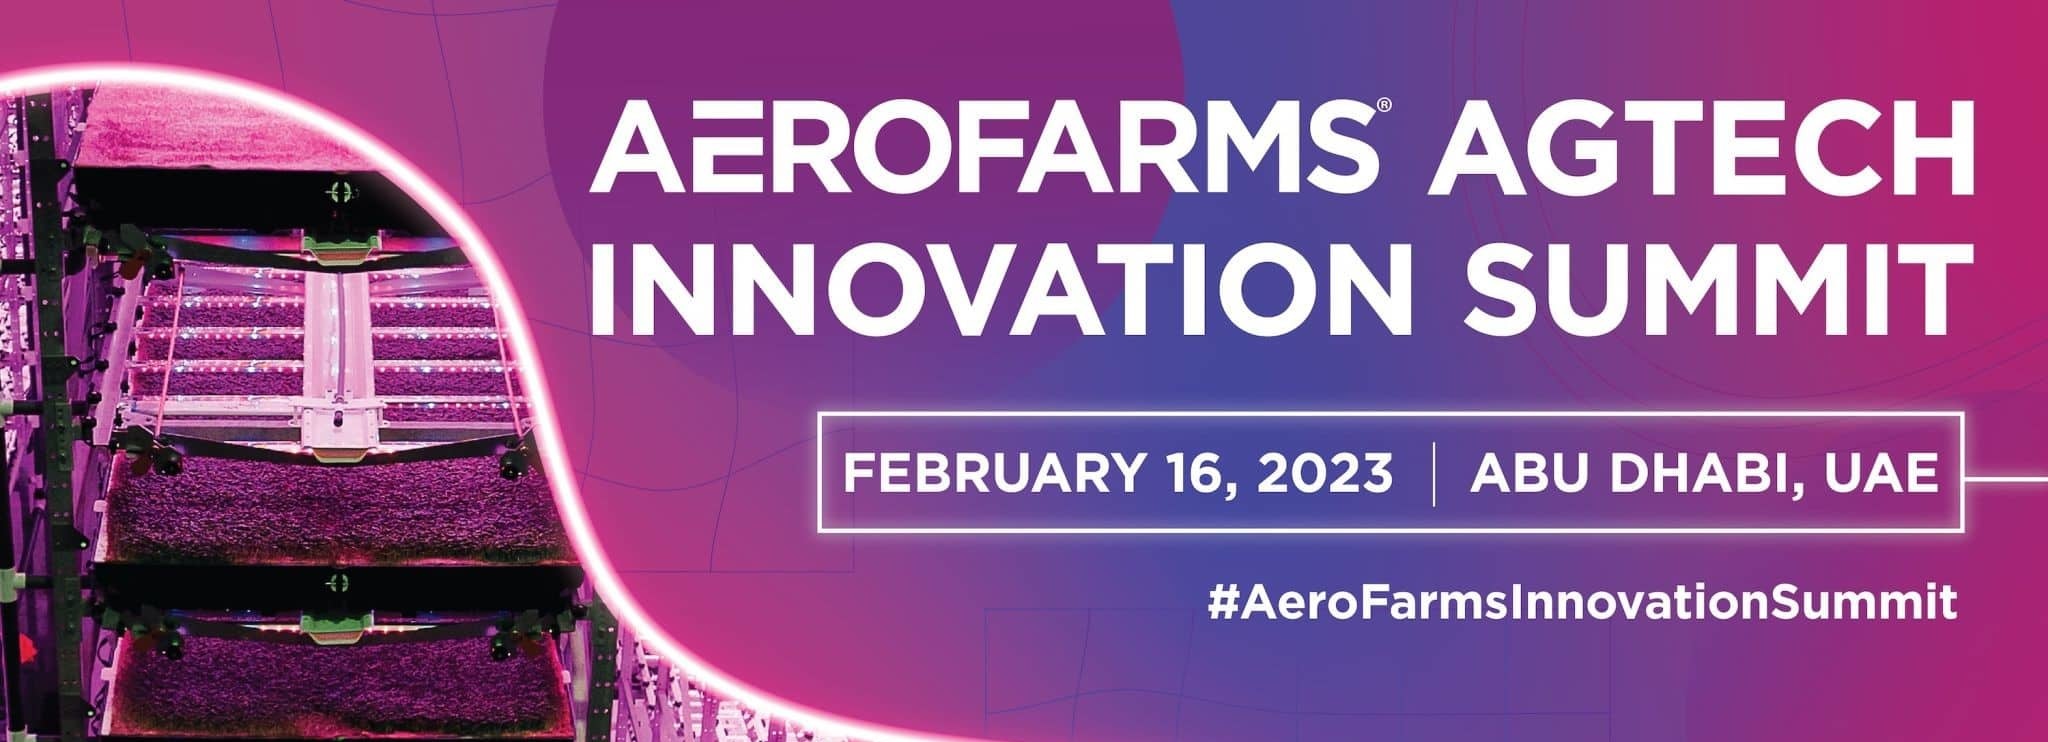 Indoor vertical farm with the text “AeroFarms AgTech Innovation Summit; February 16, 2023 | Abu Dhabi, UAE. #AeroFarmsInnovationSummit